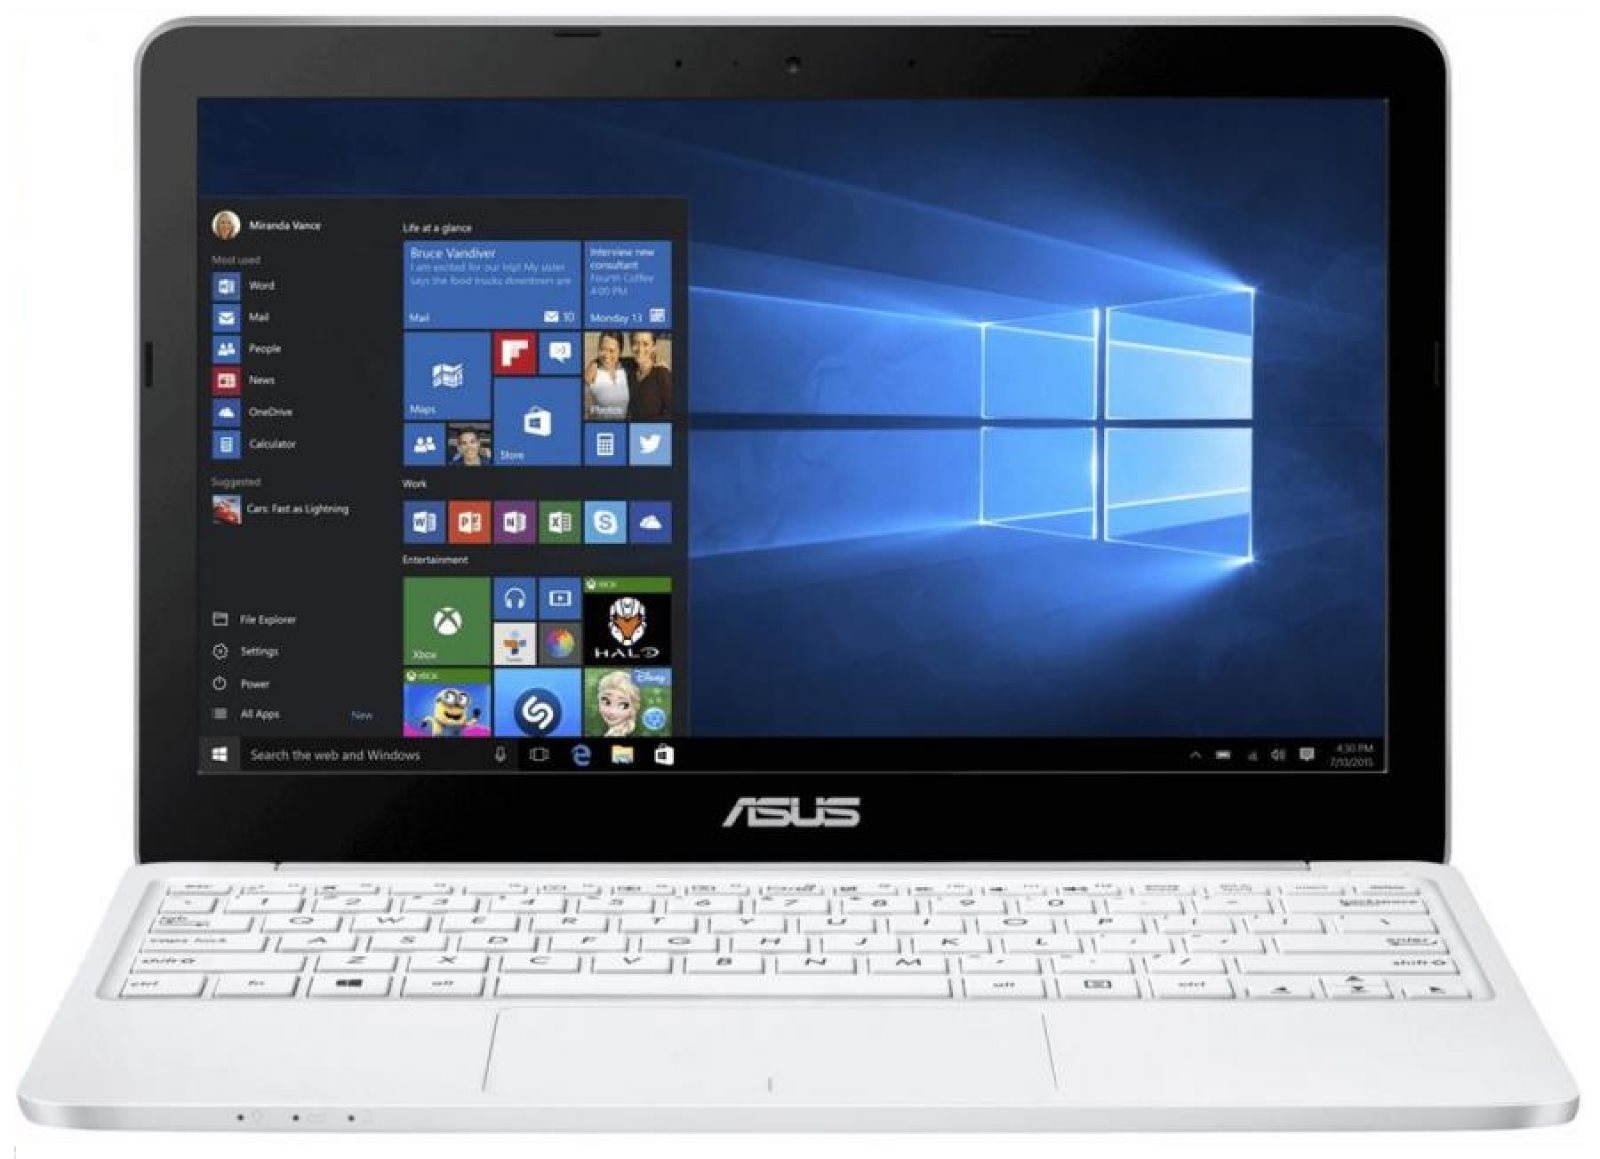 ASUS VivoBook E200HA-FD0080TS white - Laptop | Alza.cz